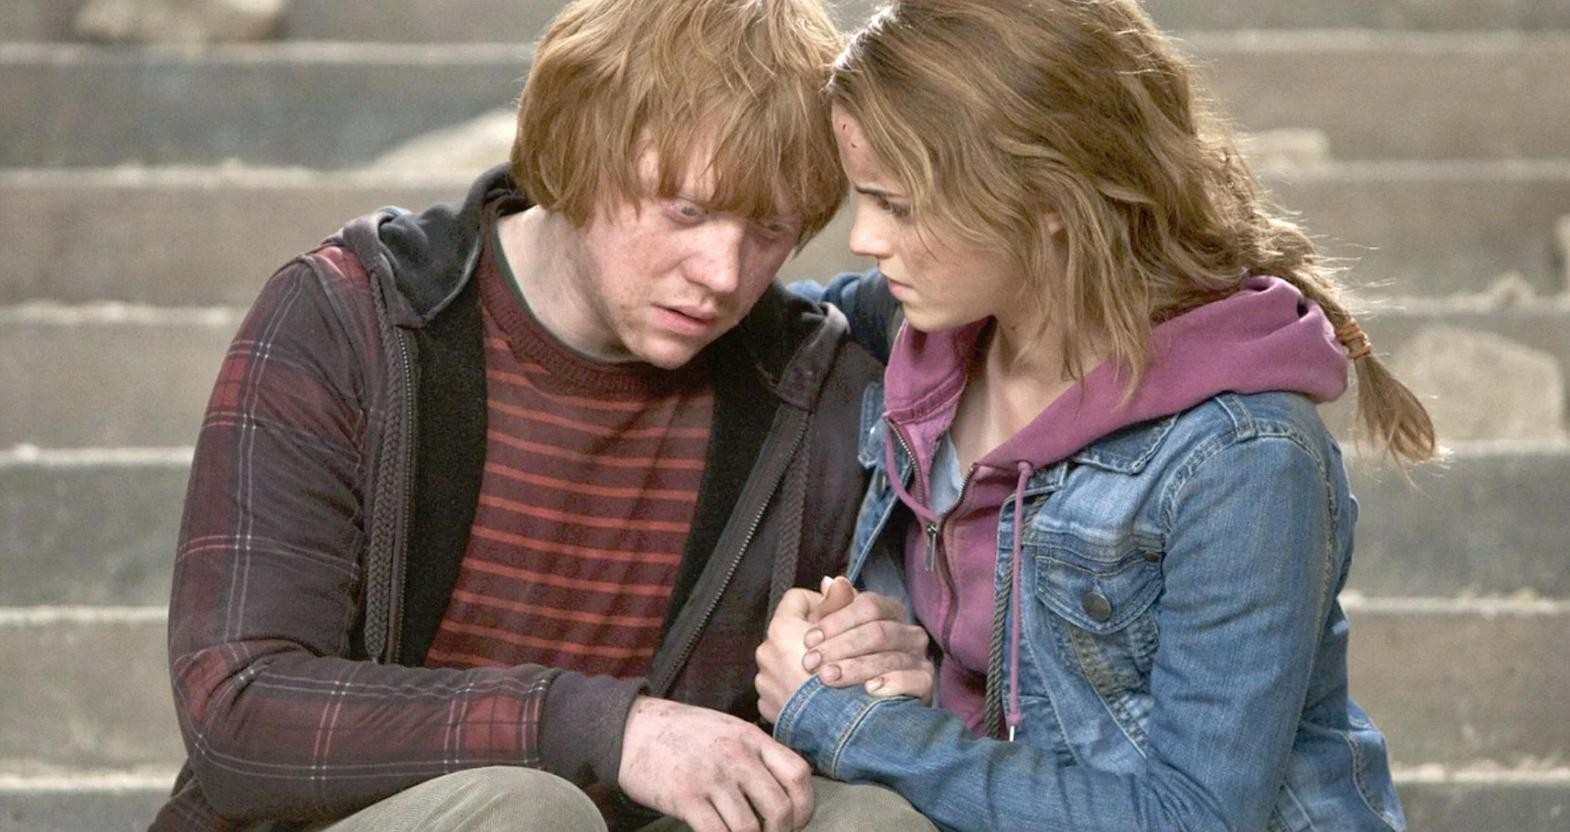 Emma Watson was stunned by Rupert Grint's astonishing scene